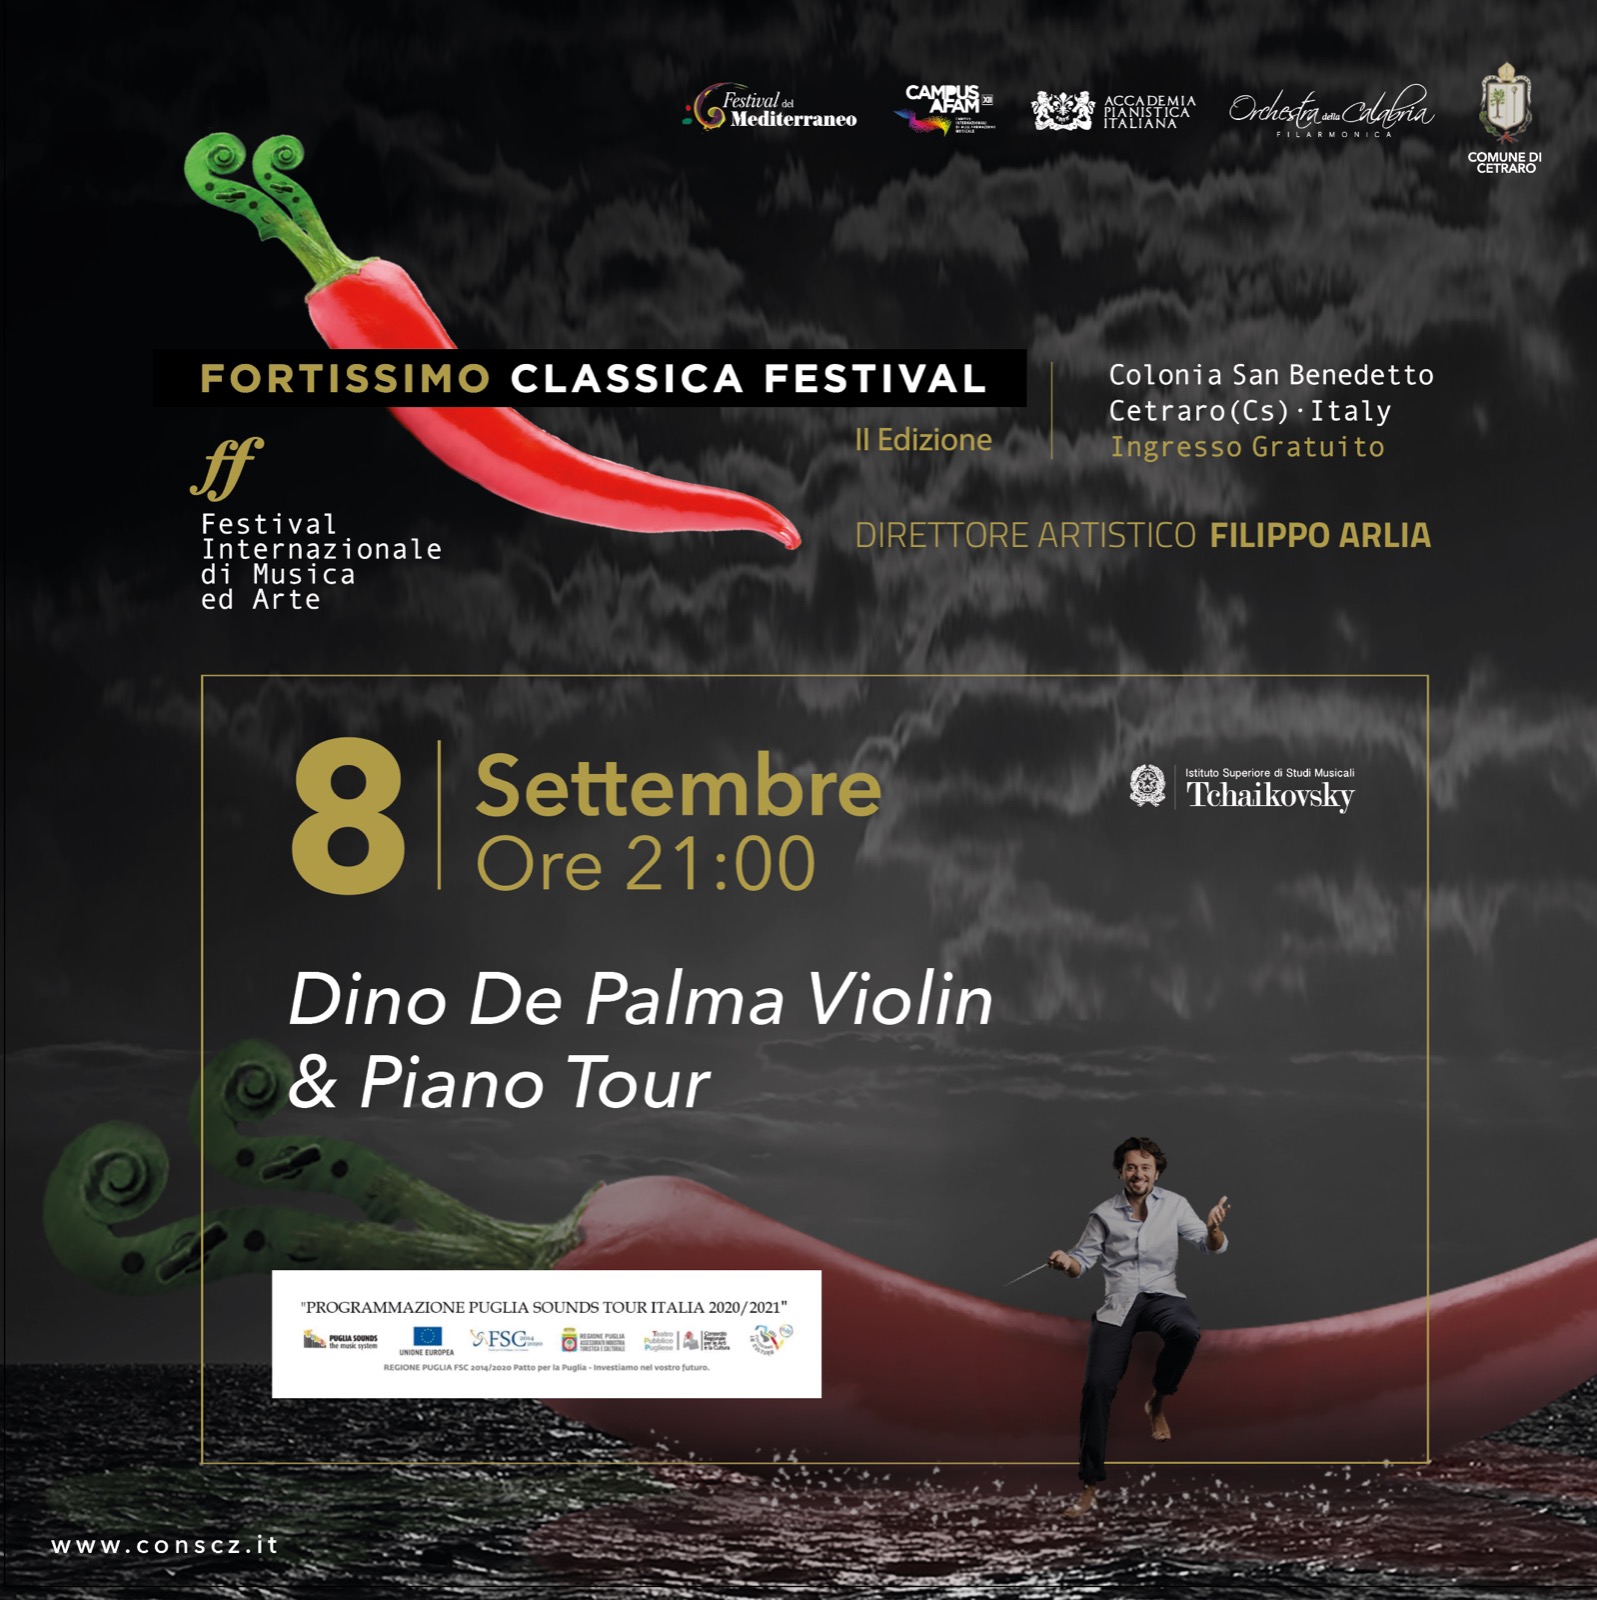 Dino De Palma Violin & Piano Tour8 settembre – Cetraro (CS)